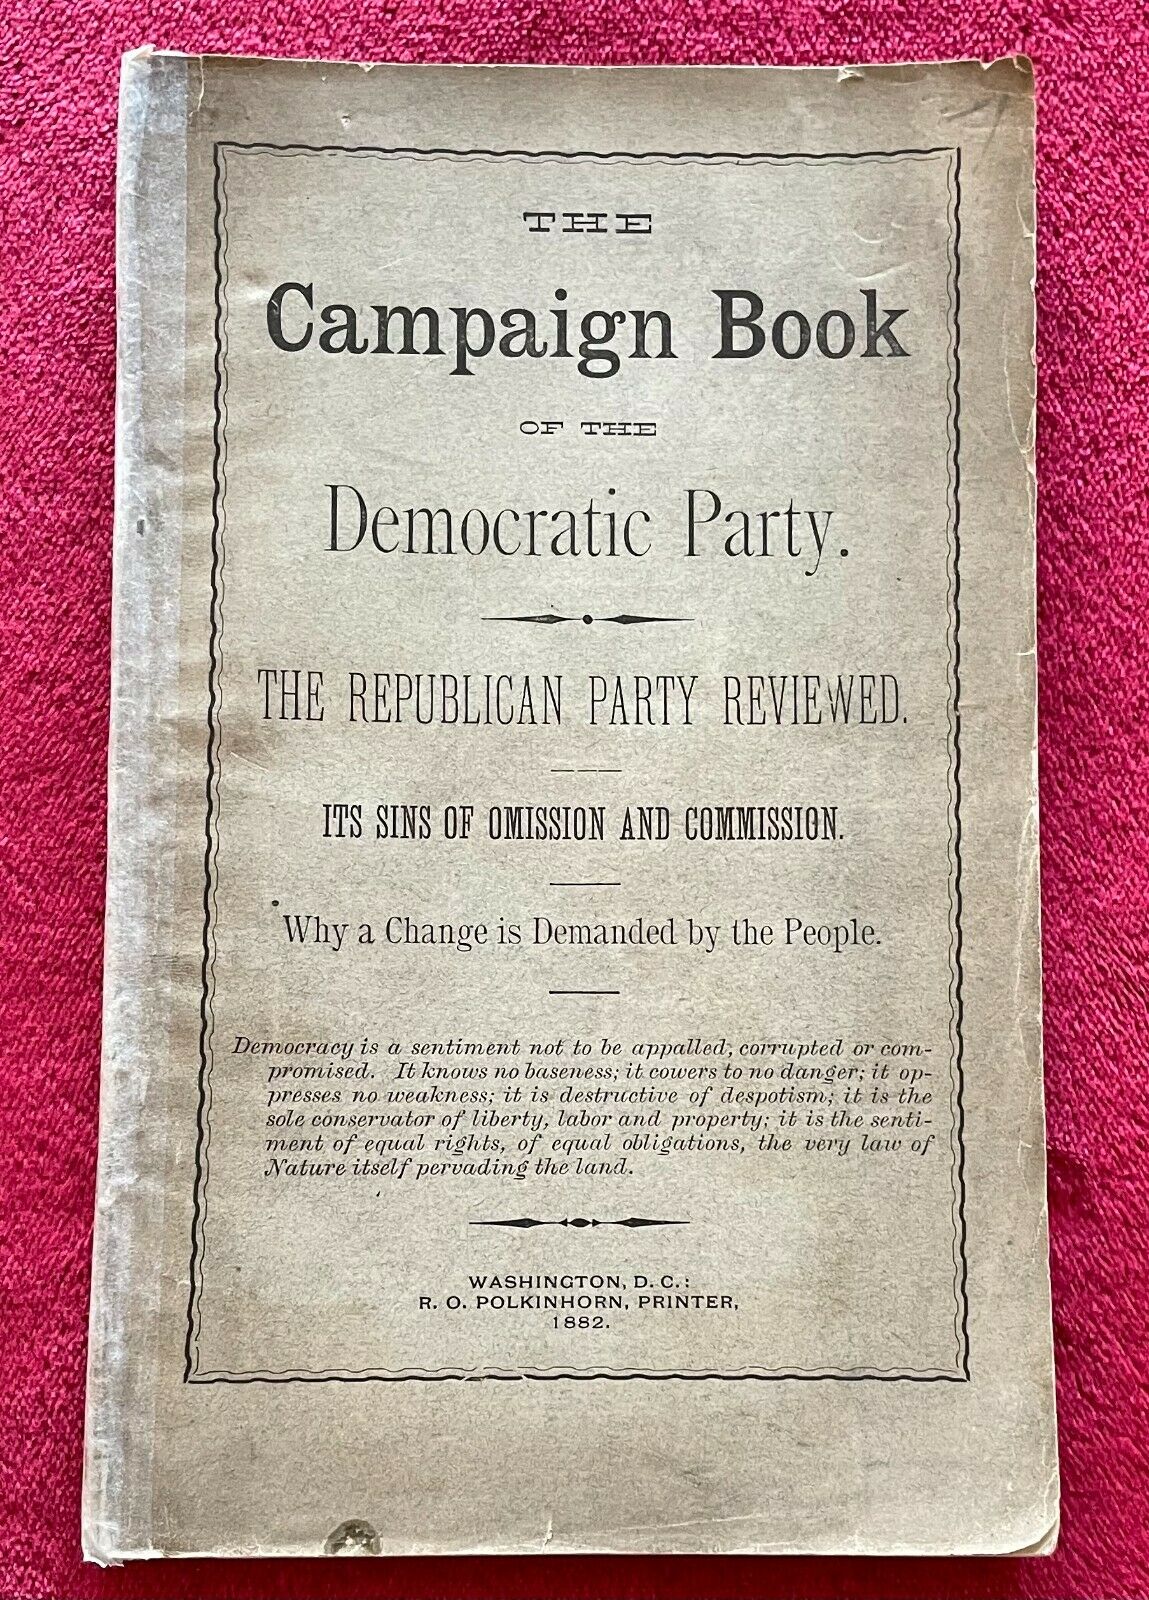 1882 Campaign Book Of The Democratic Party - Rare Original Publication